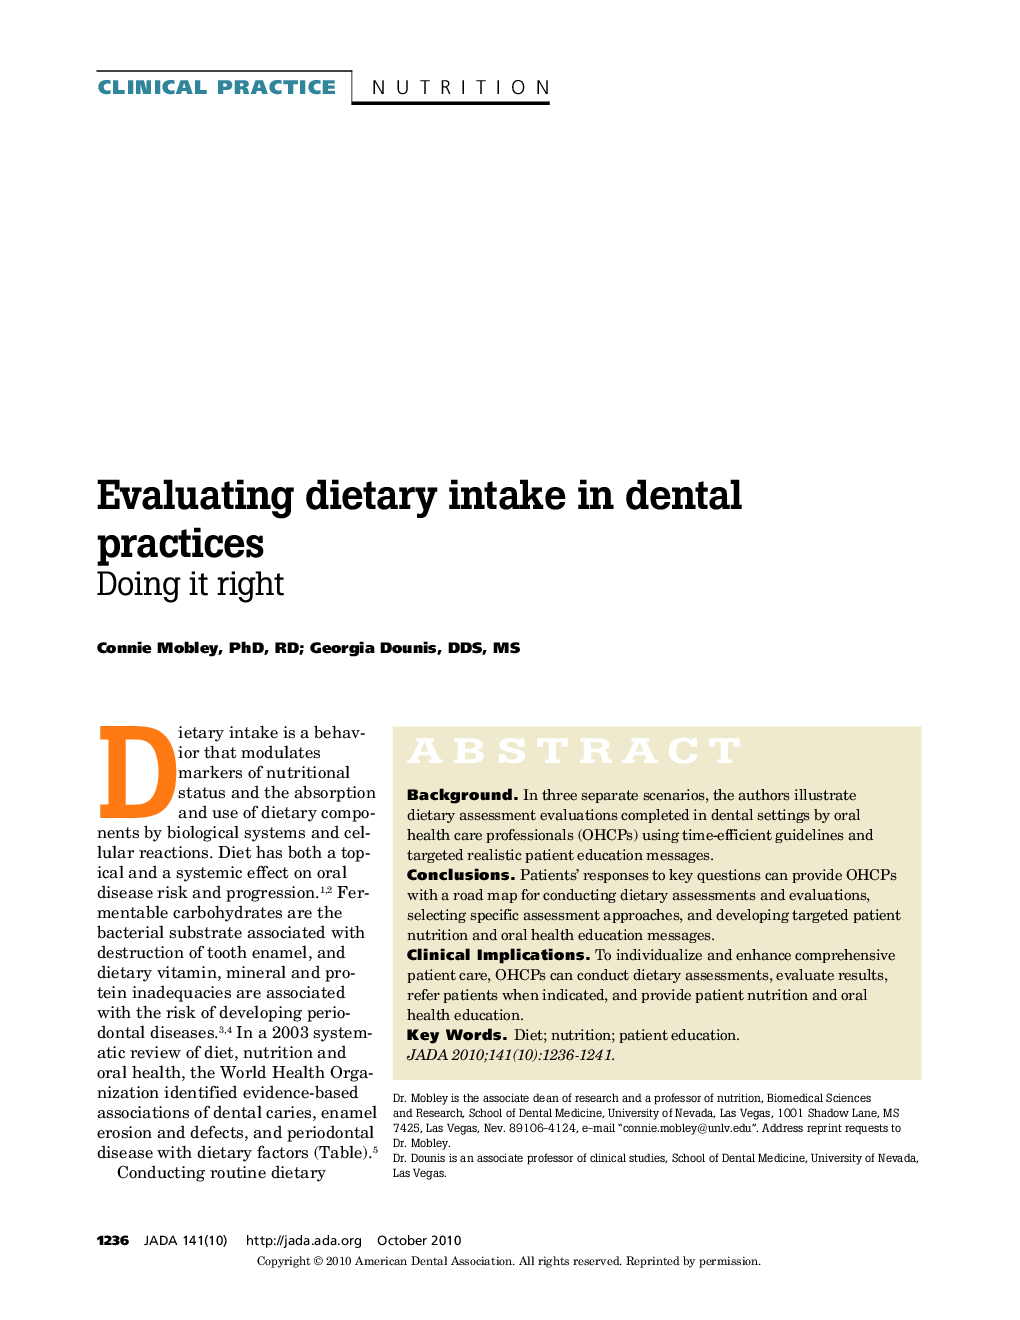 Evaluating Dietary Intake in Dental Practices 